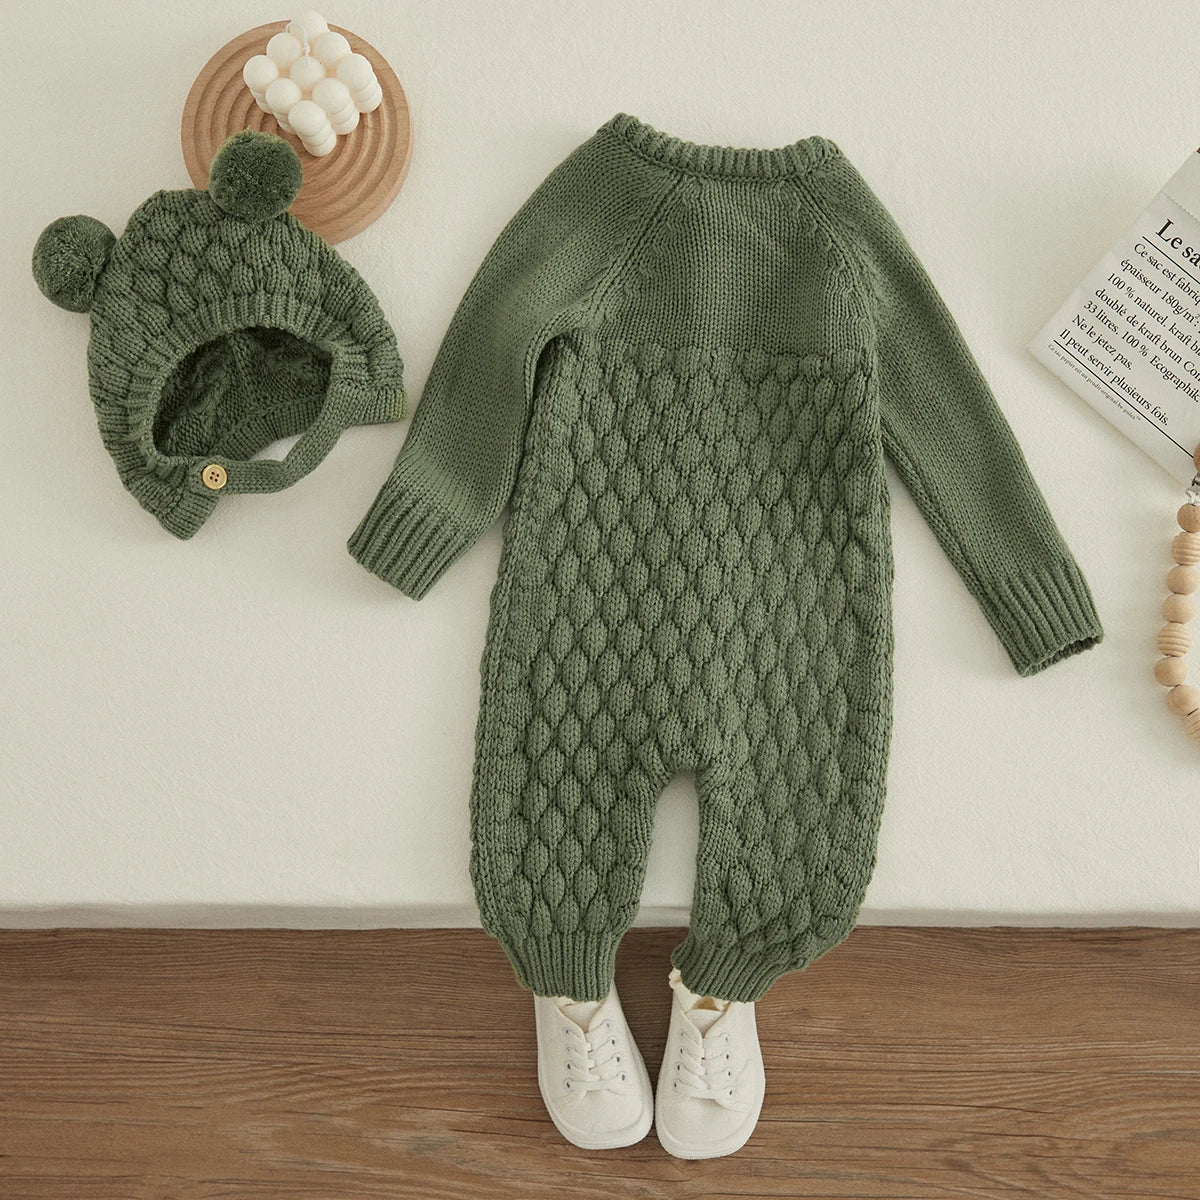 VI-Sgogo Baby 2PCS Winter Jumpsuit Outfits Infant Baby Clothes